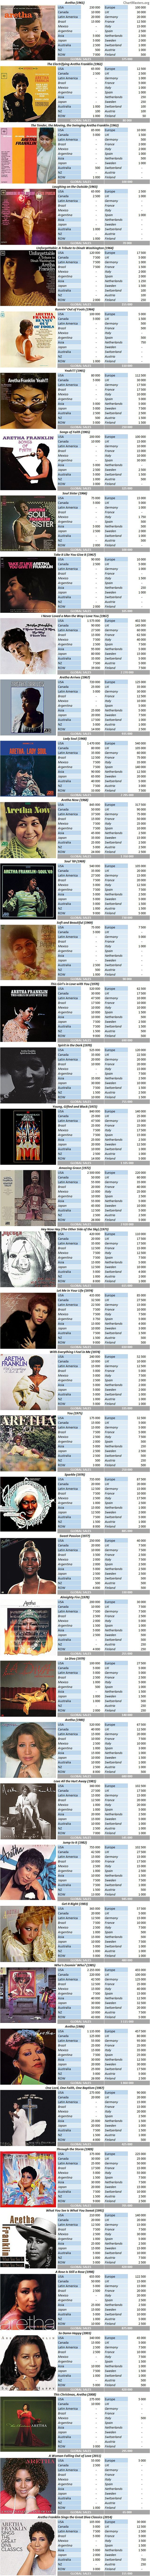 CSPC Aretha Frankling album sales breakdowns